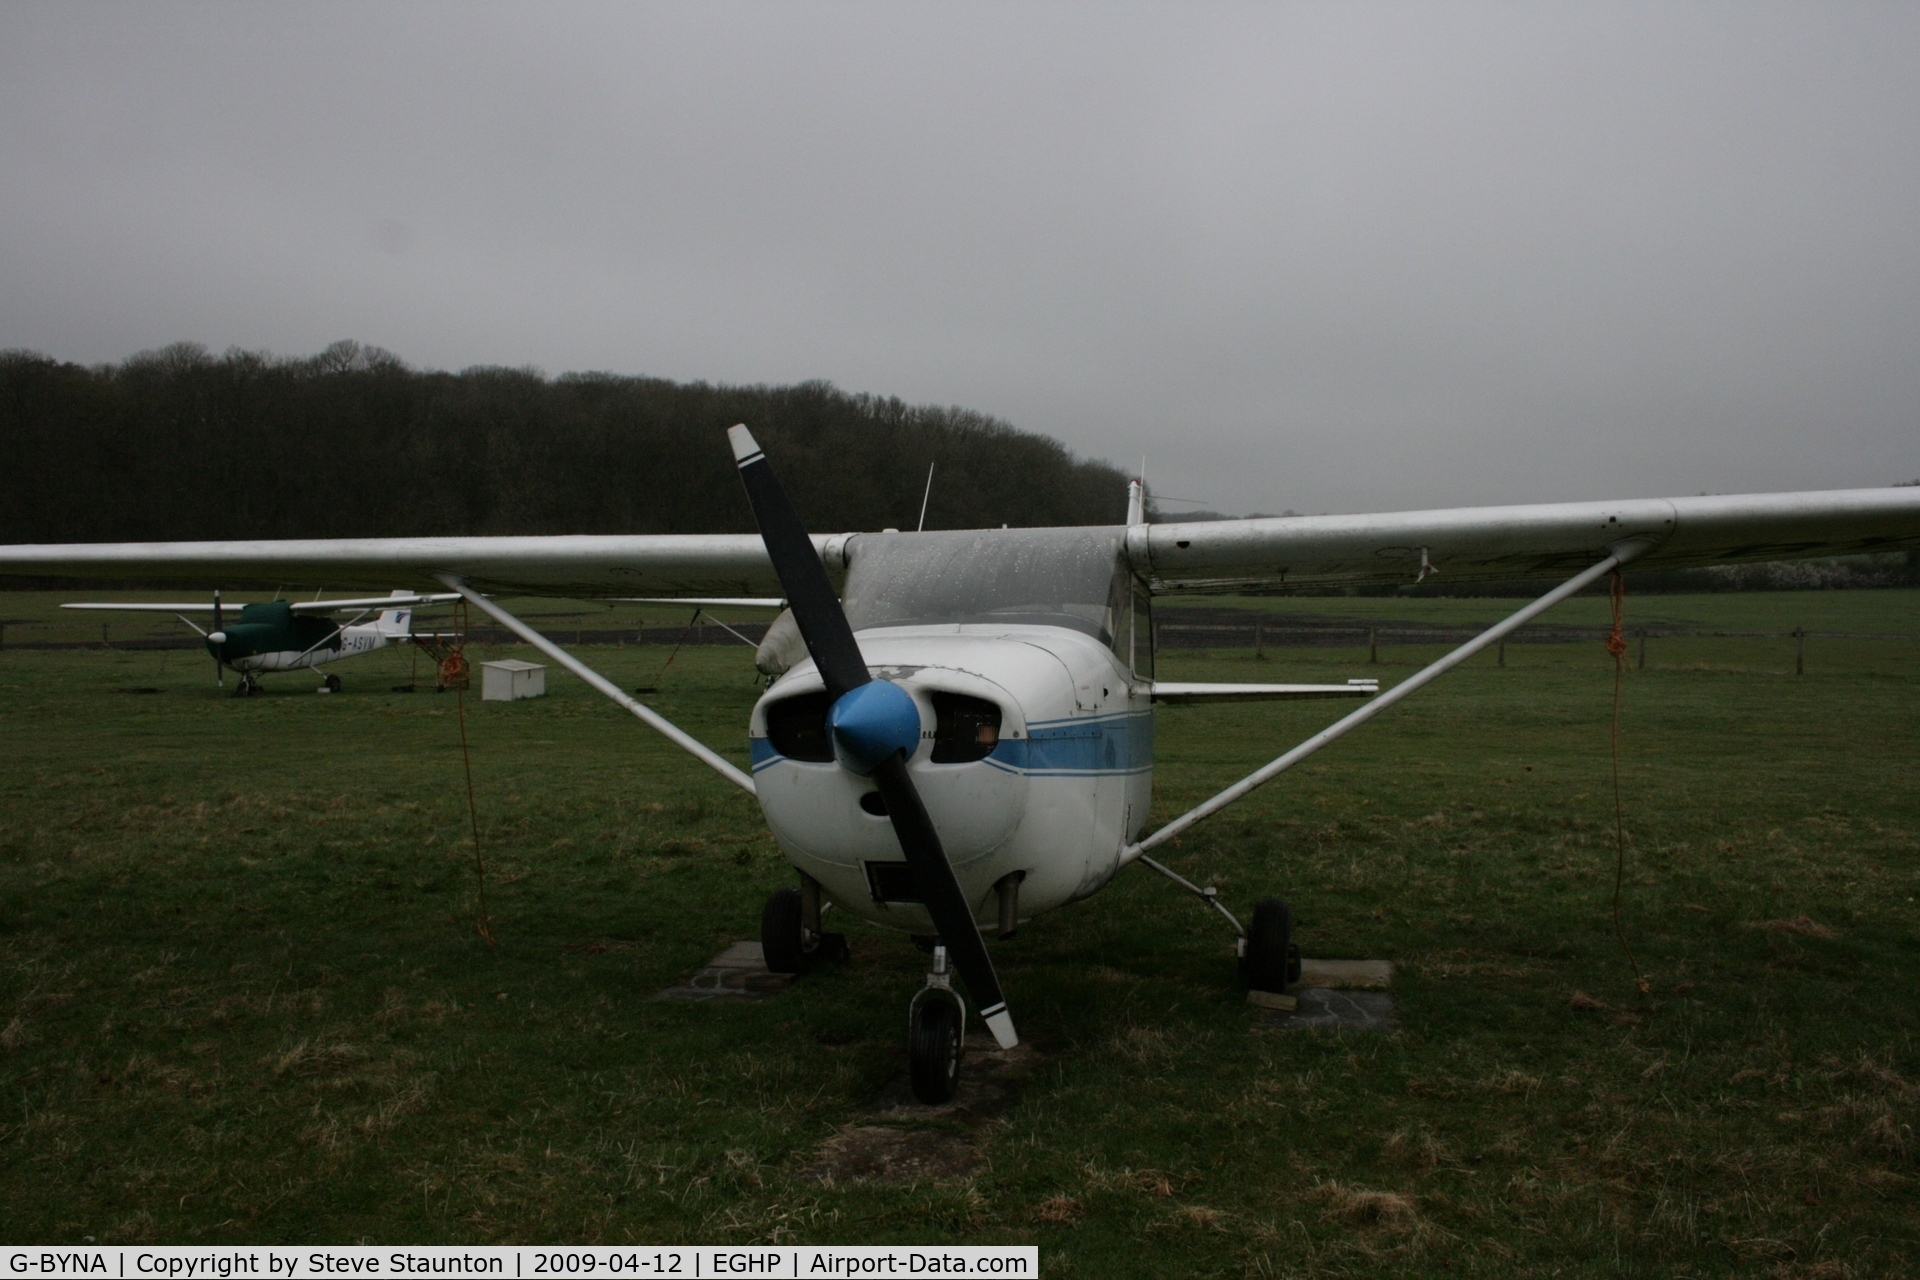 G-BYNA, 1969 Reims F172H Skyhawk C/N 0626, Taken at Popham Airfield, England on a gloomy April Sunday (12/04/09)